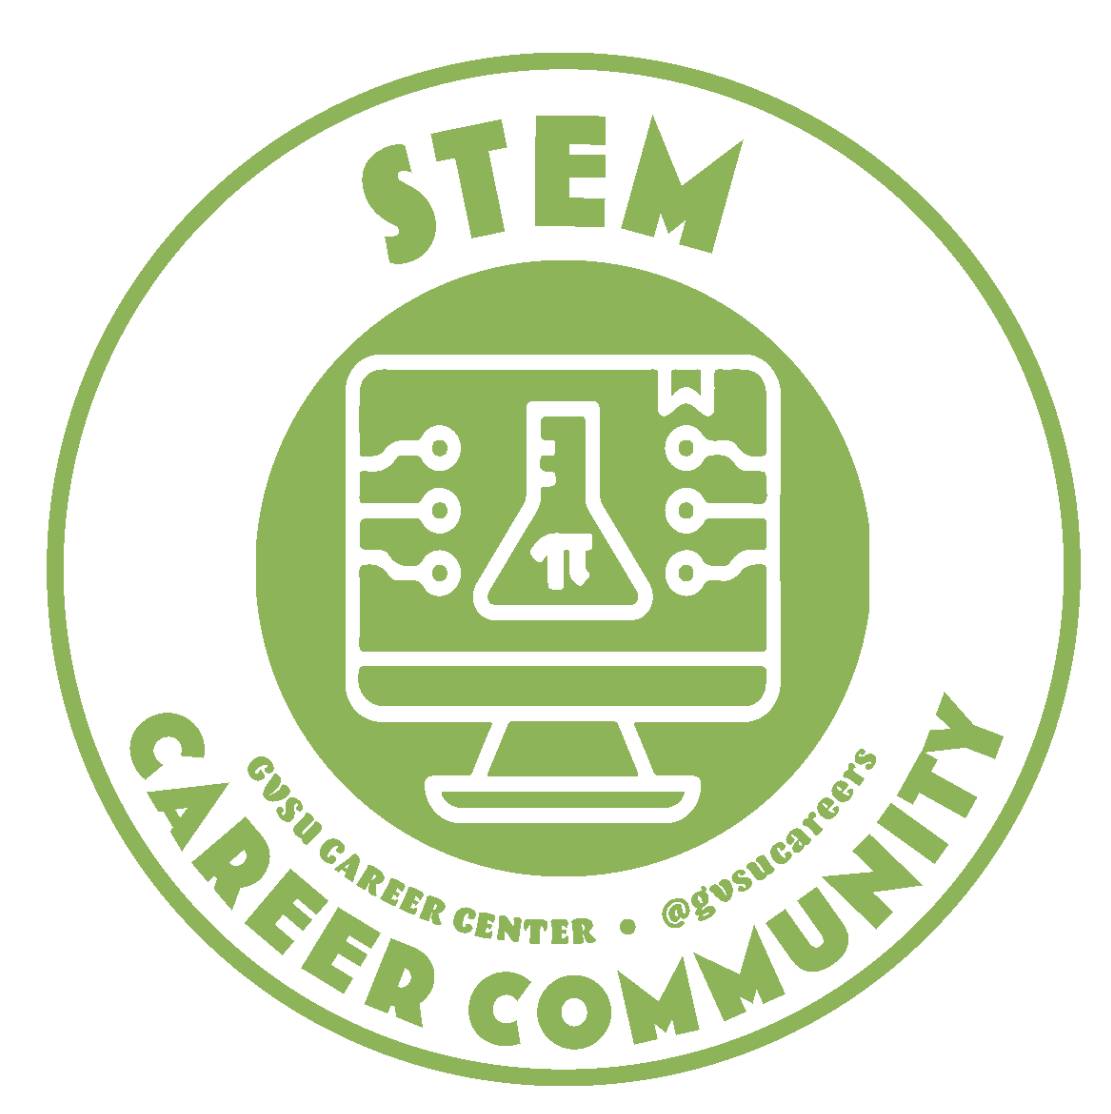 stem career community logo